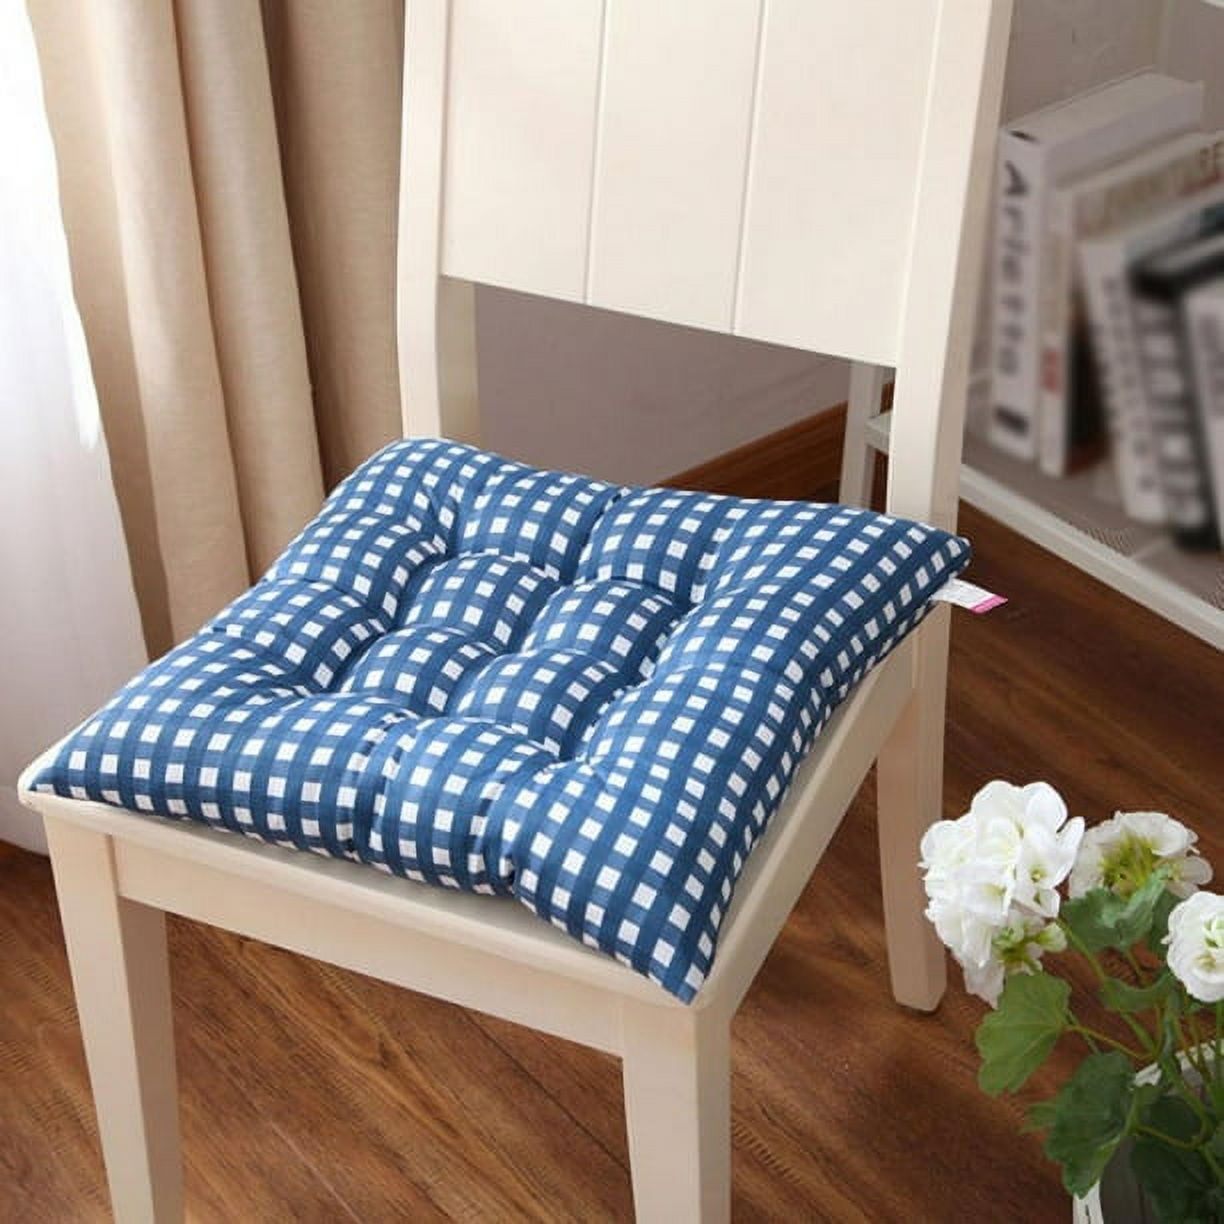 Walbest 15.75 x 15.75 Dining Chair Cushion, Soft Chair Pad Seat